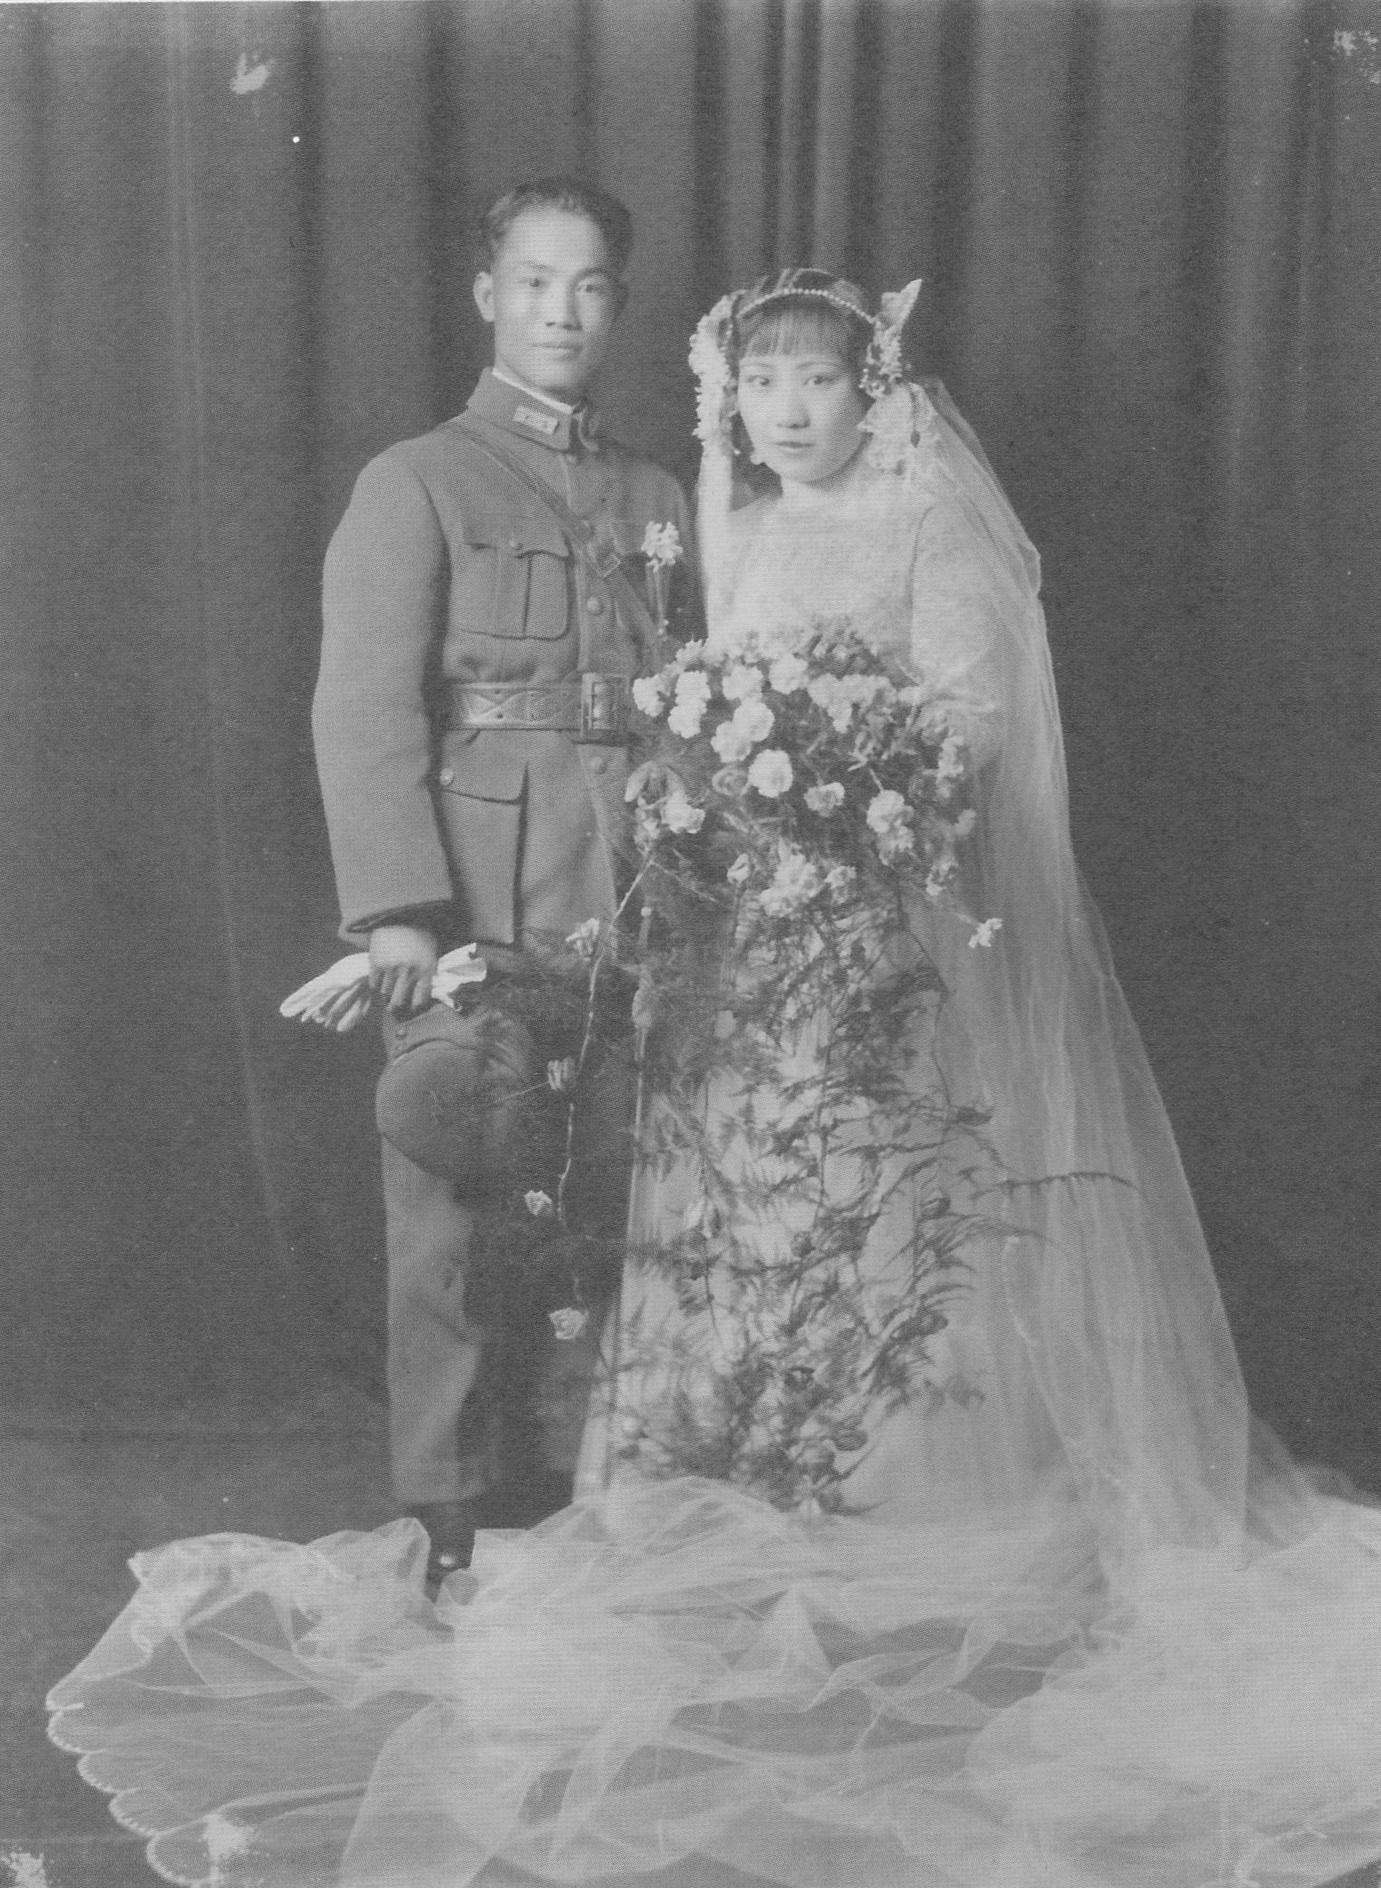 Wedding photo of Chen Cheng and Tan Xiang, 1932